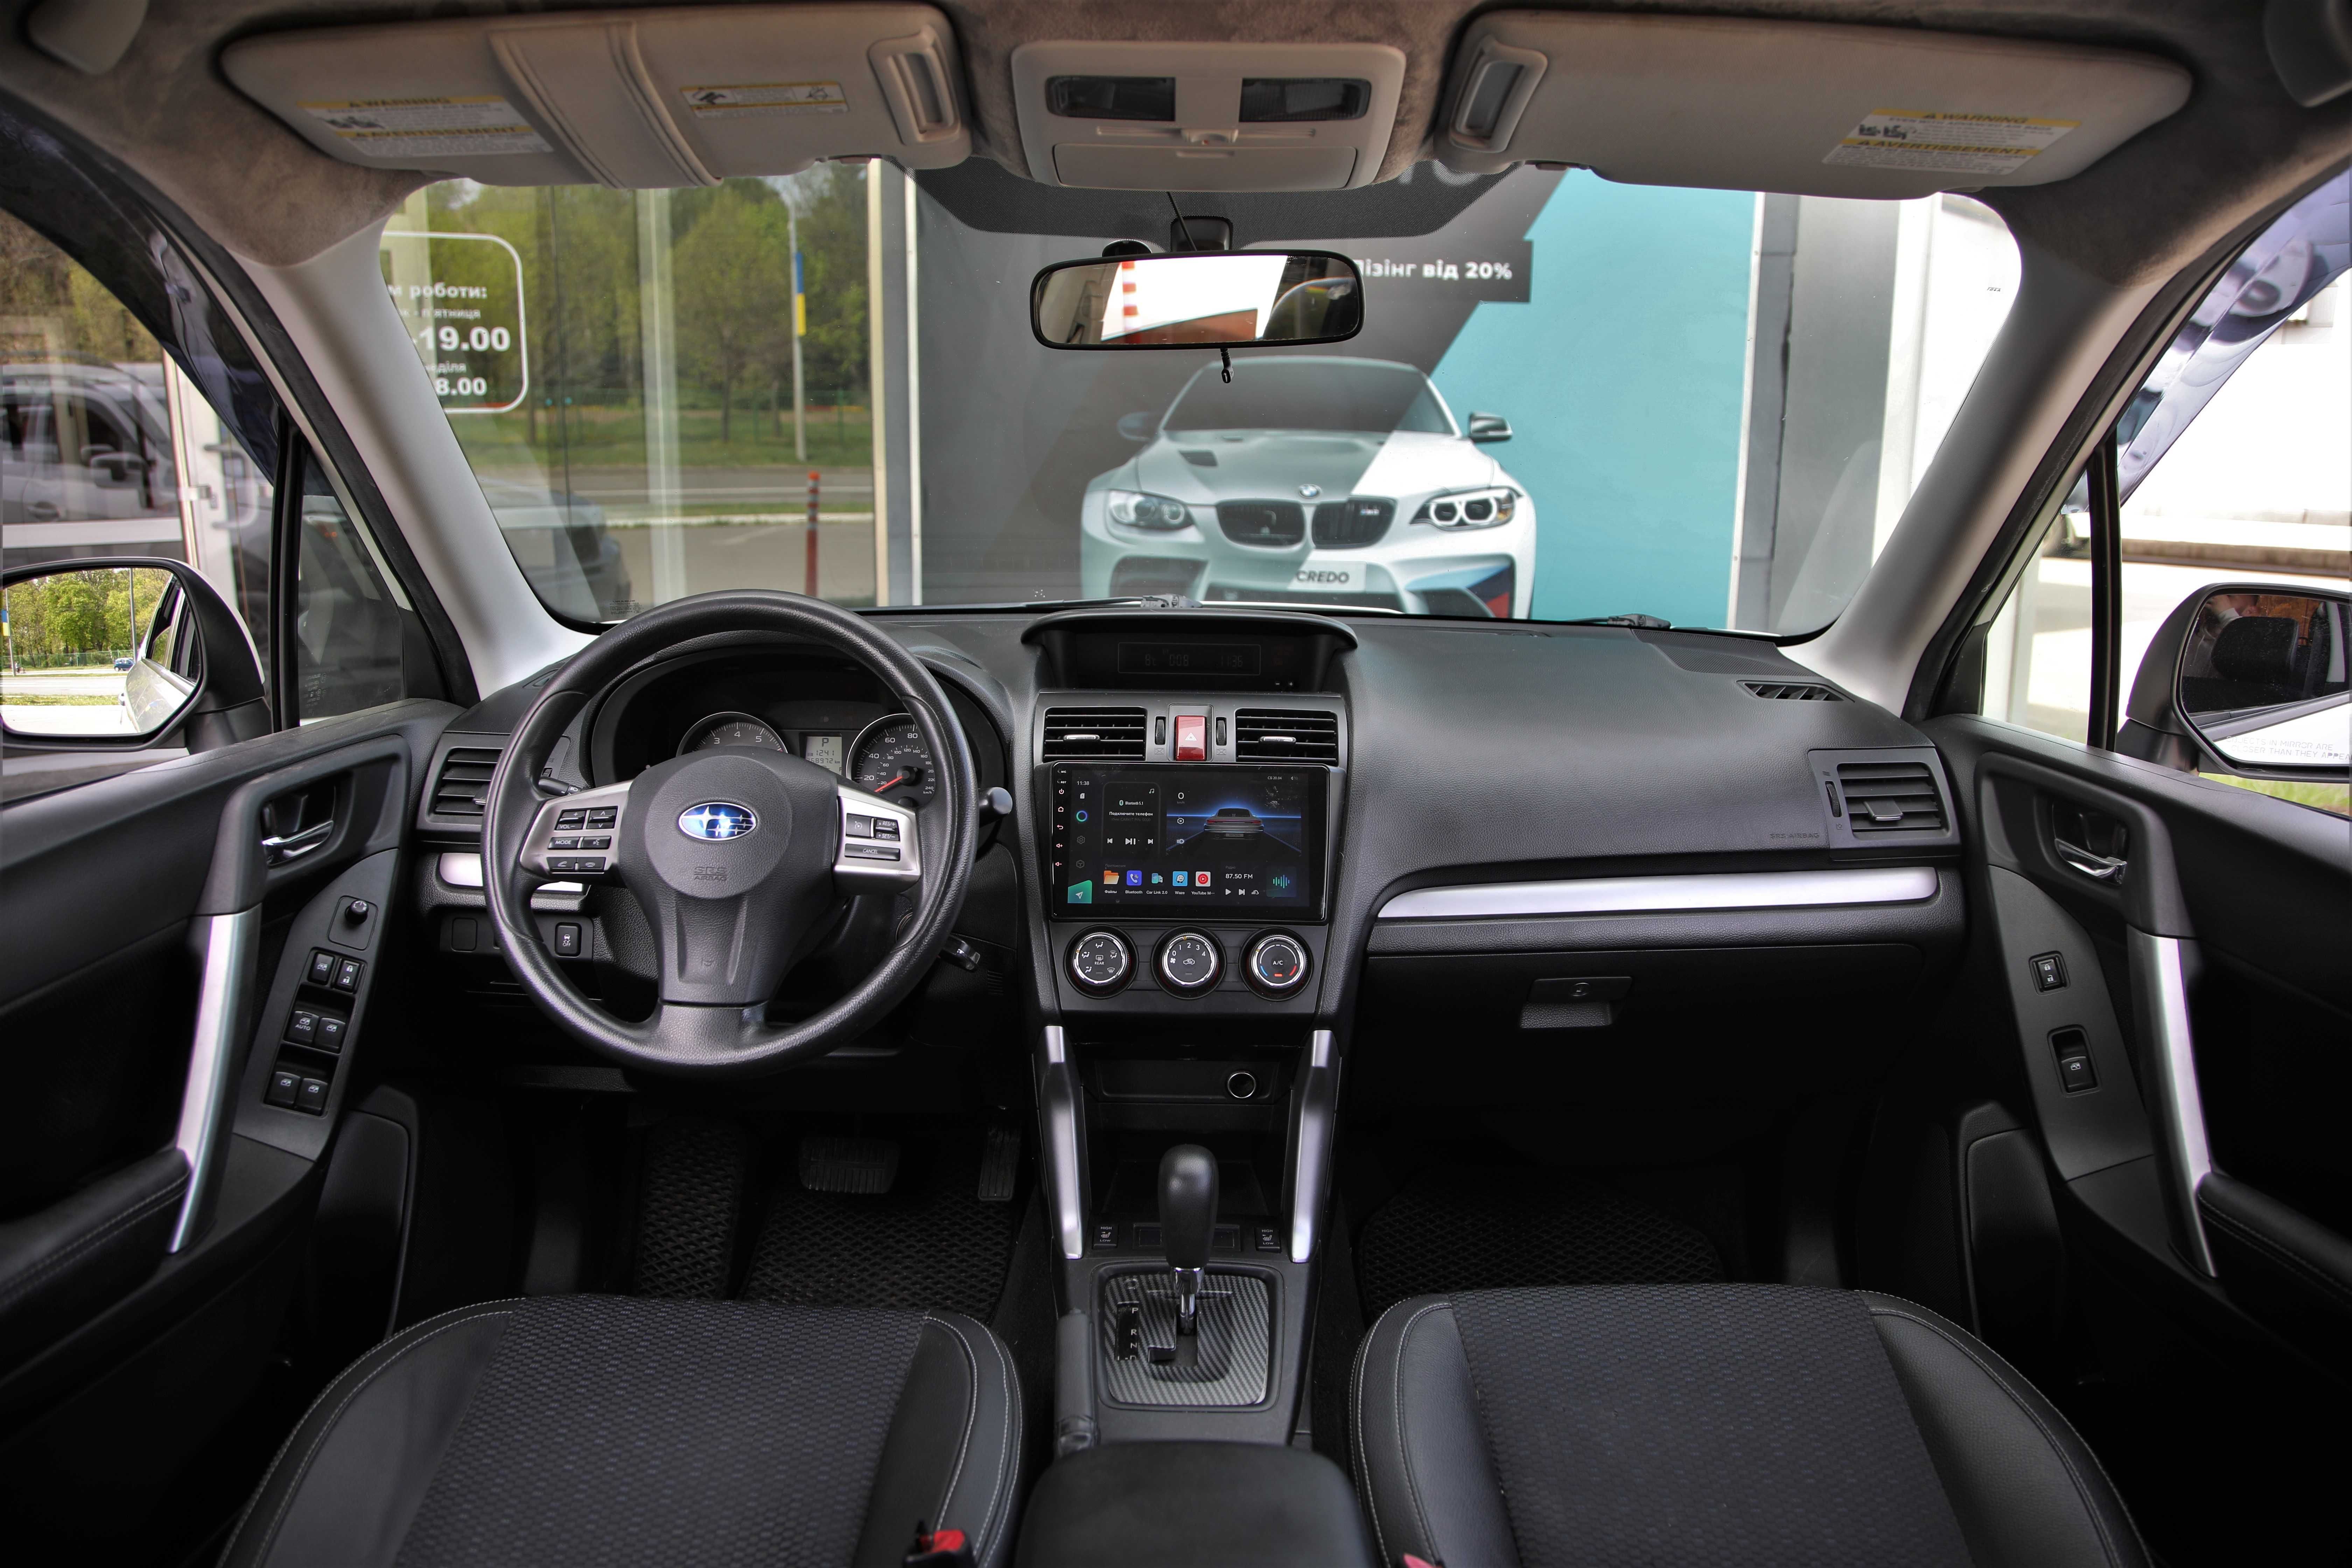 Subaru Forester 2013 року